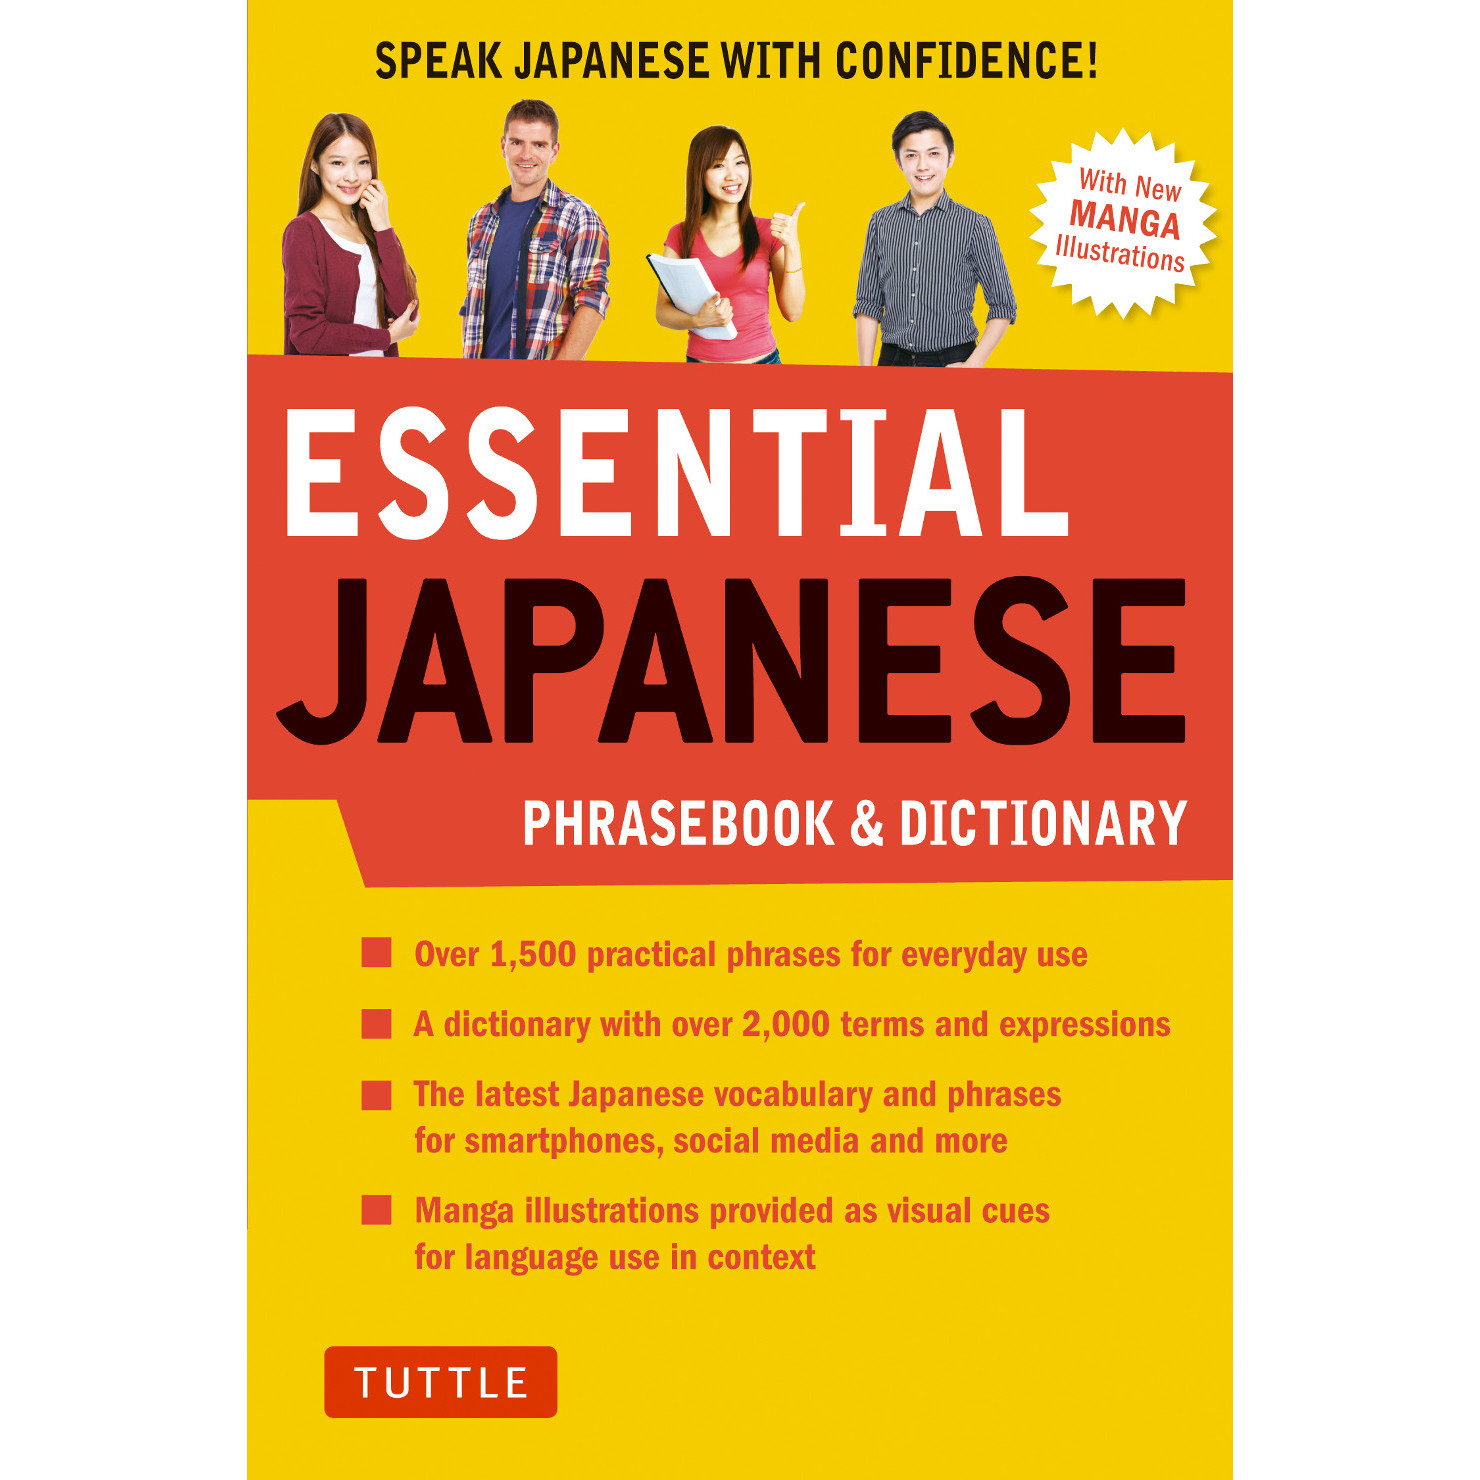 Essential Japanese Phrasebook & Dictionary (9784805314449)